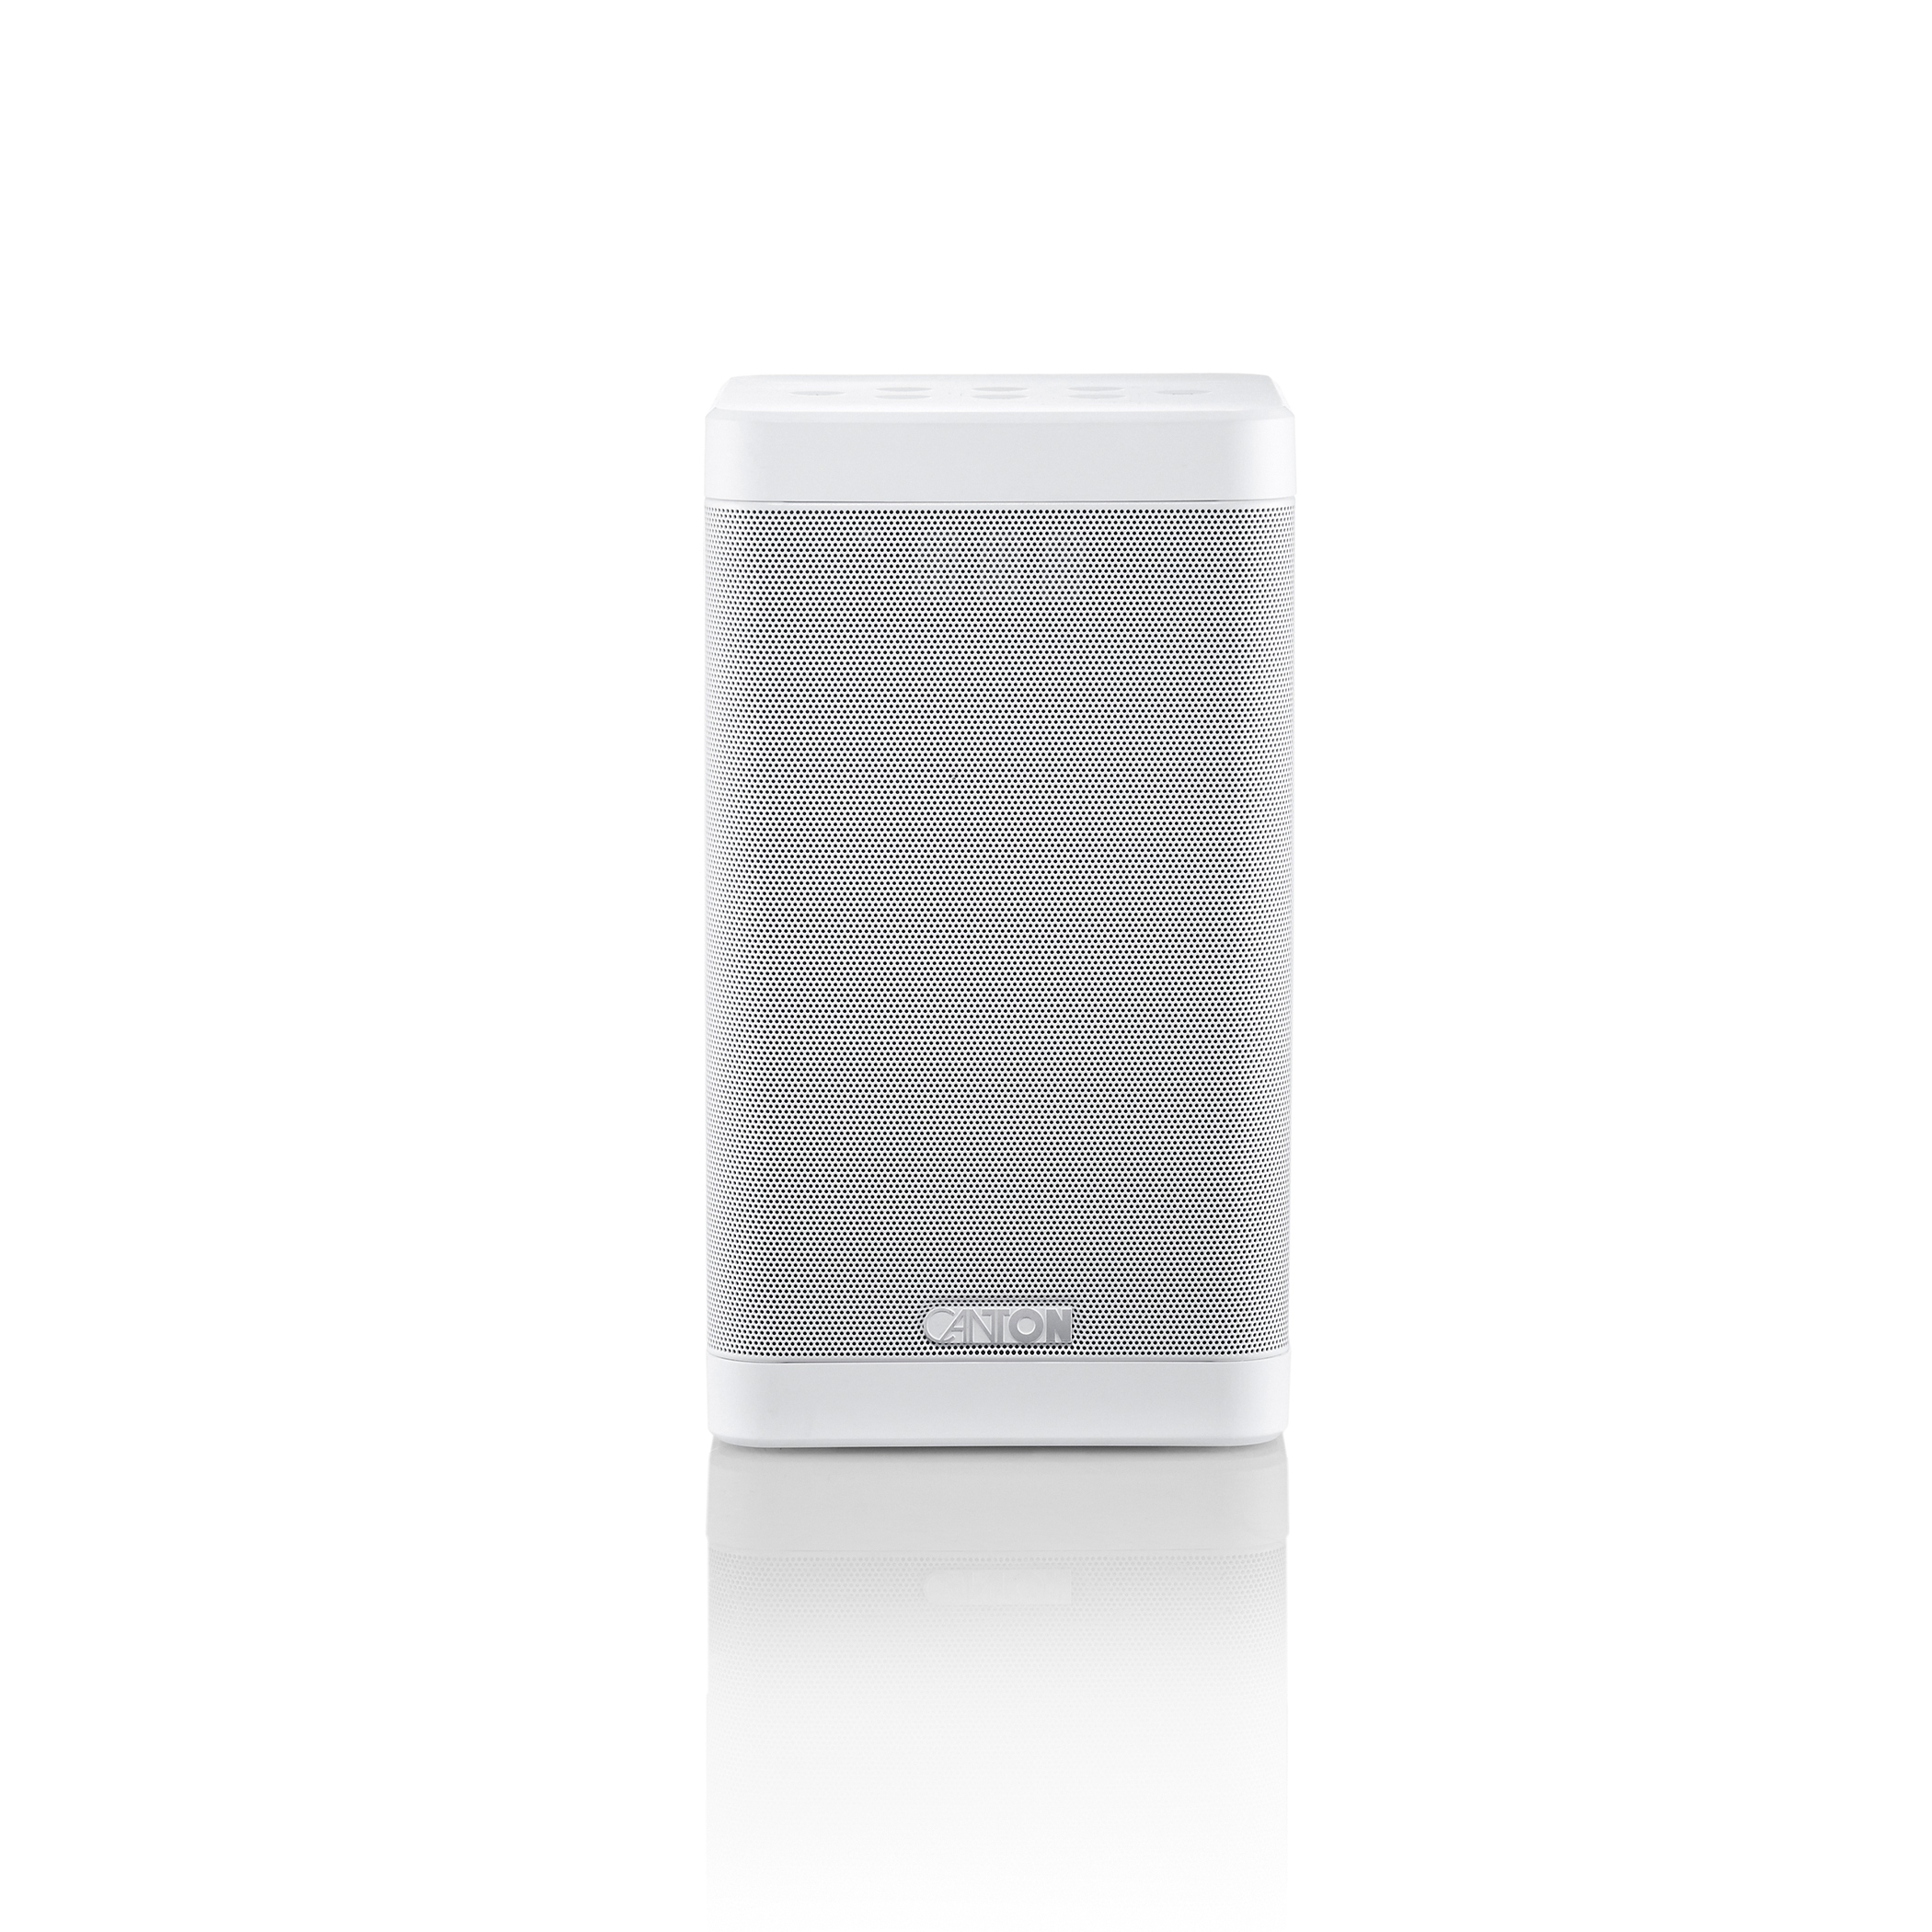 SMART SOUNDBOX 3 S2, active multiroomspeaker version 2021, white